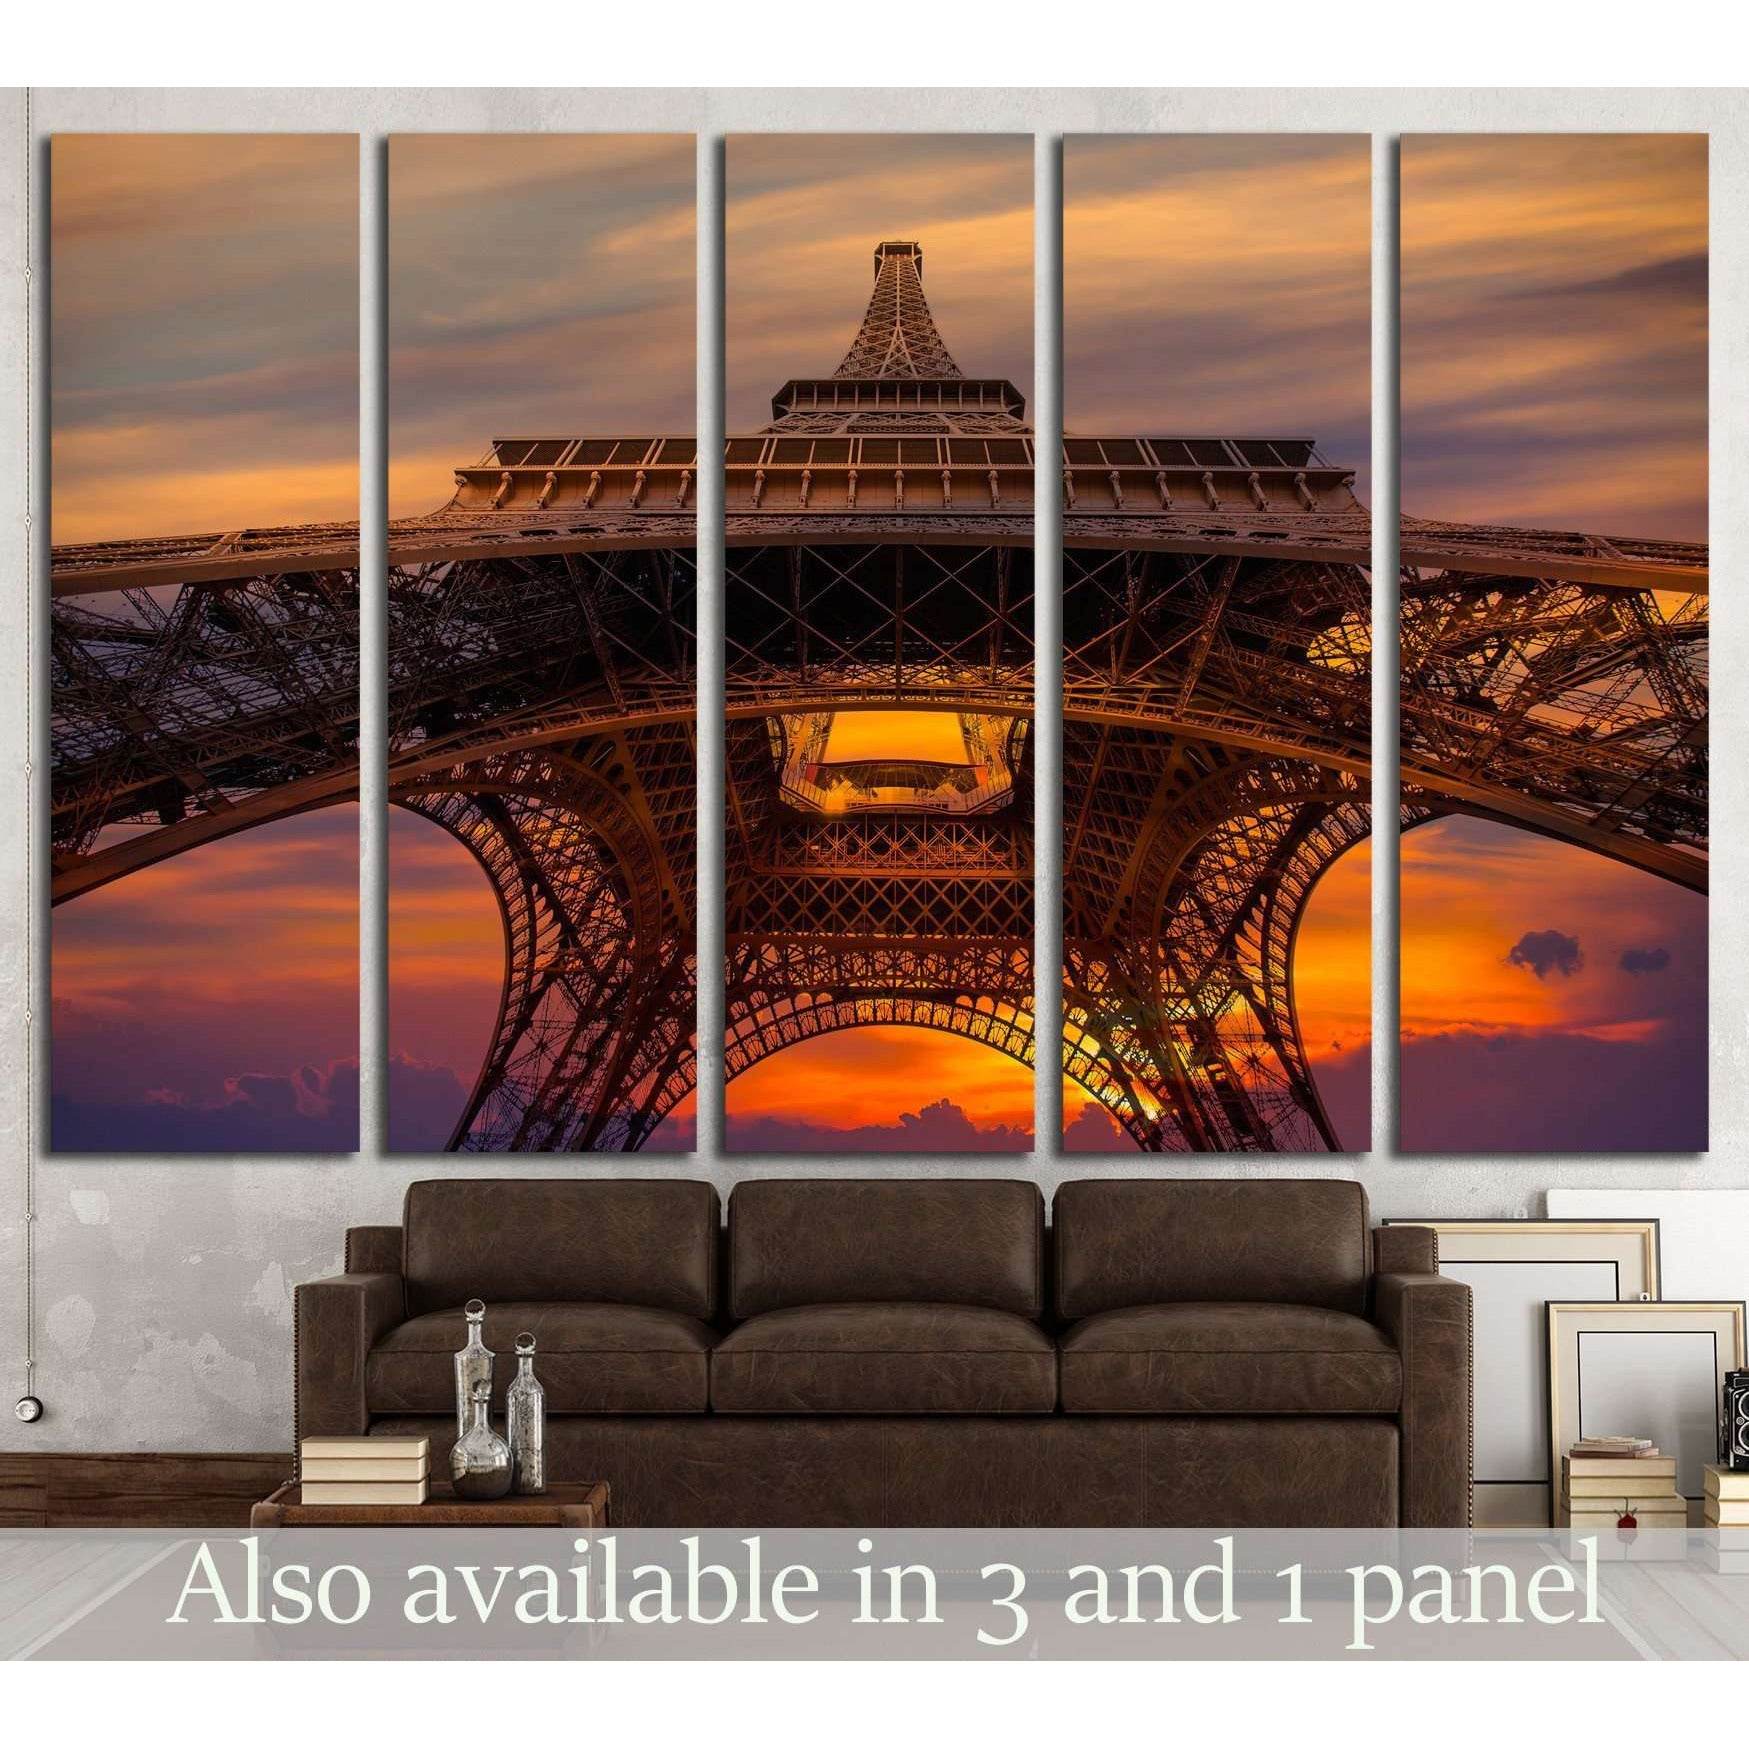 Eiffel tower, Paris, France №1188 Ready to Hang Canvas Print